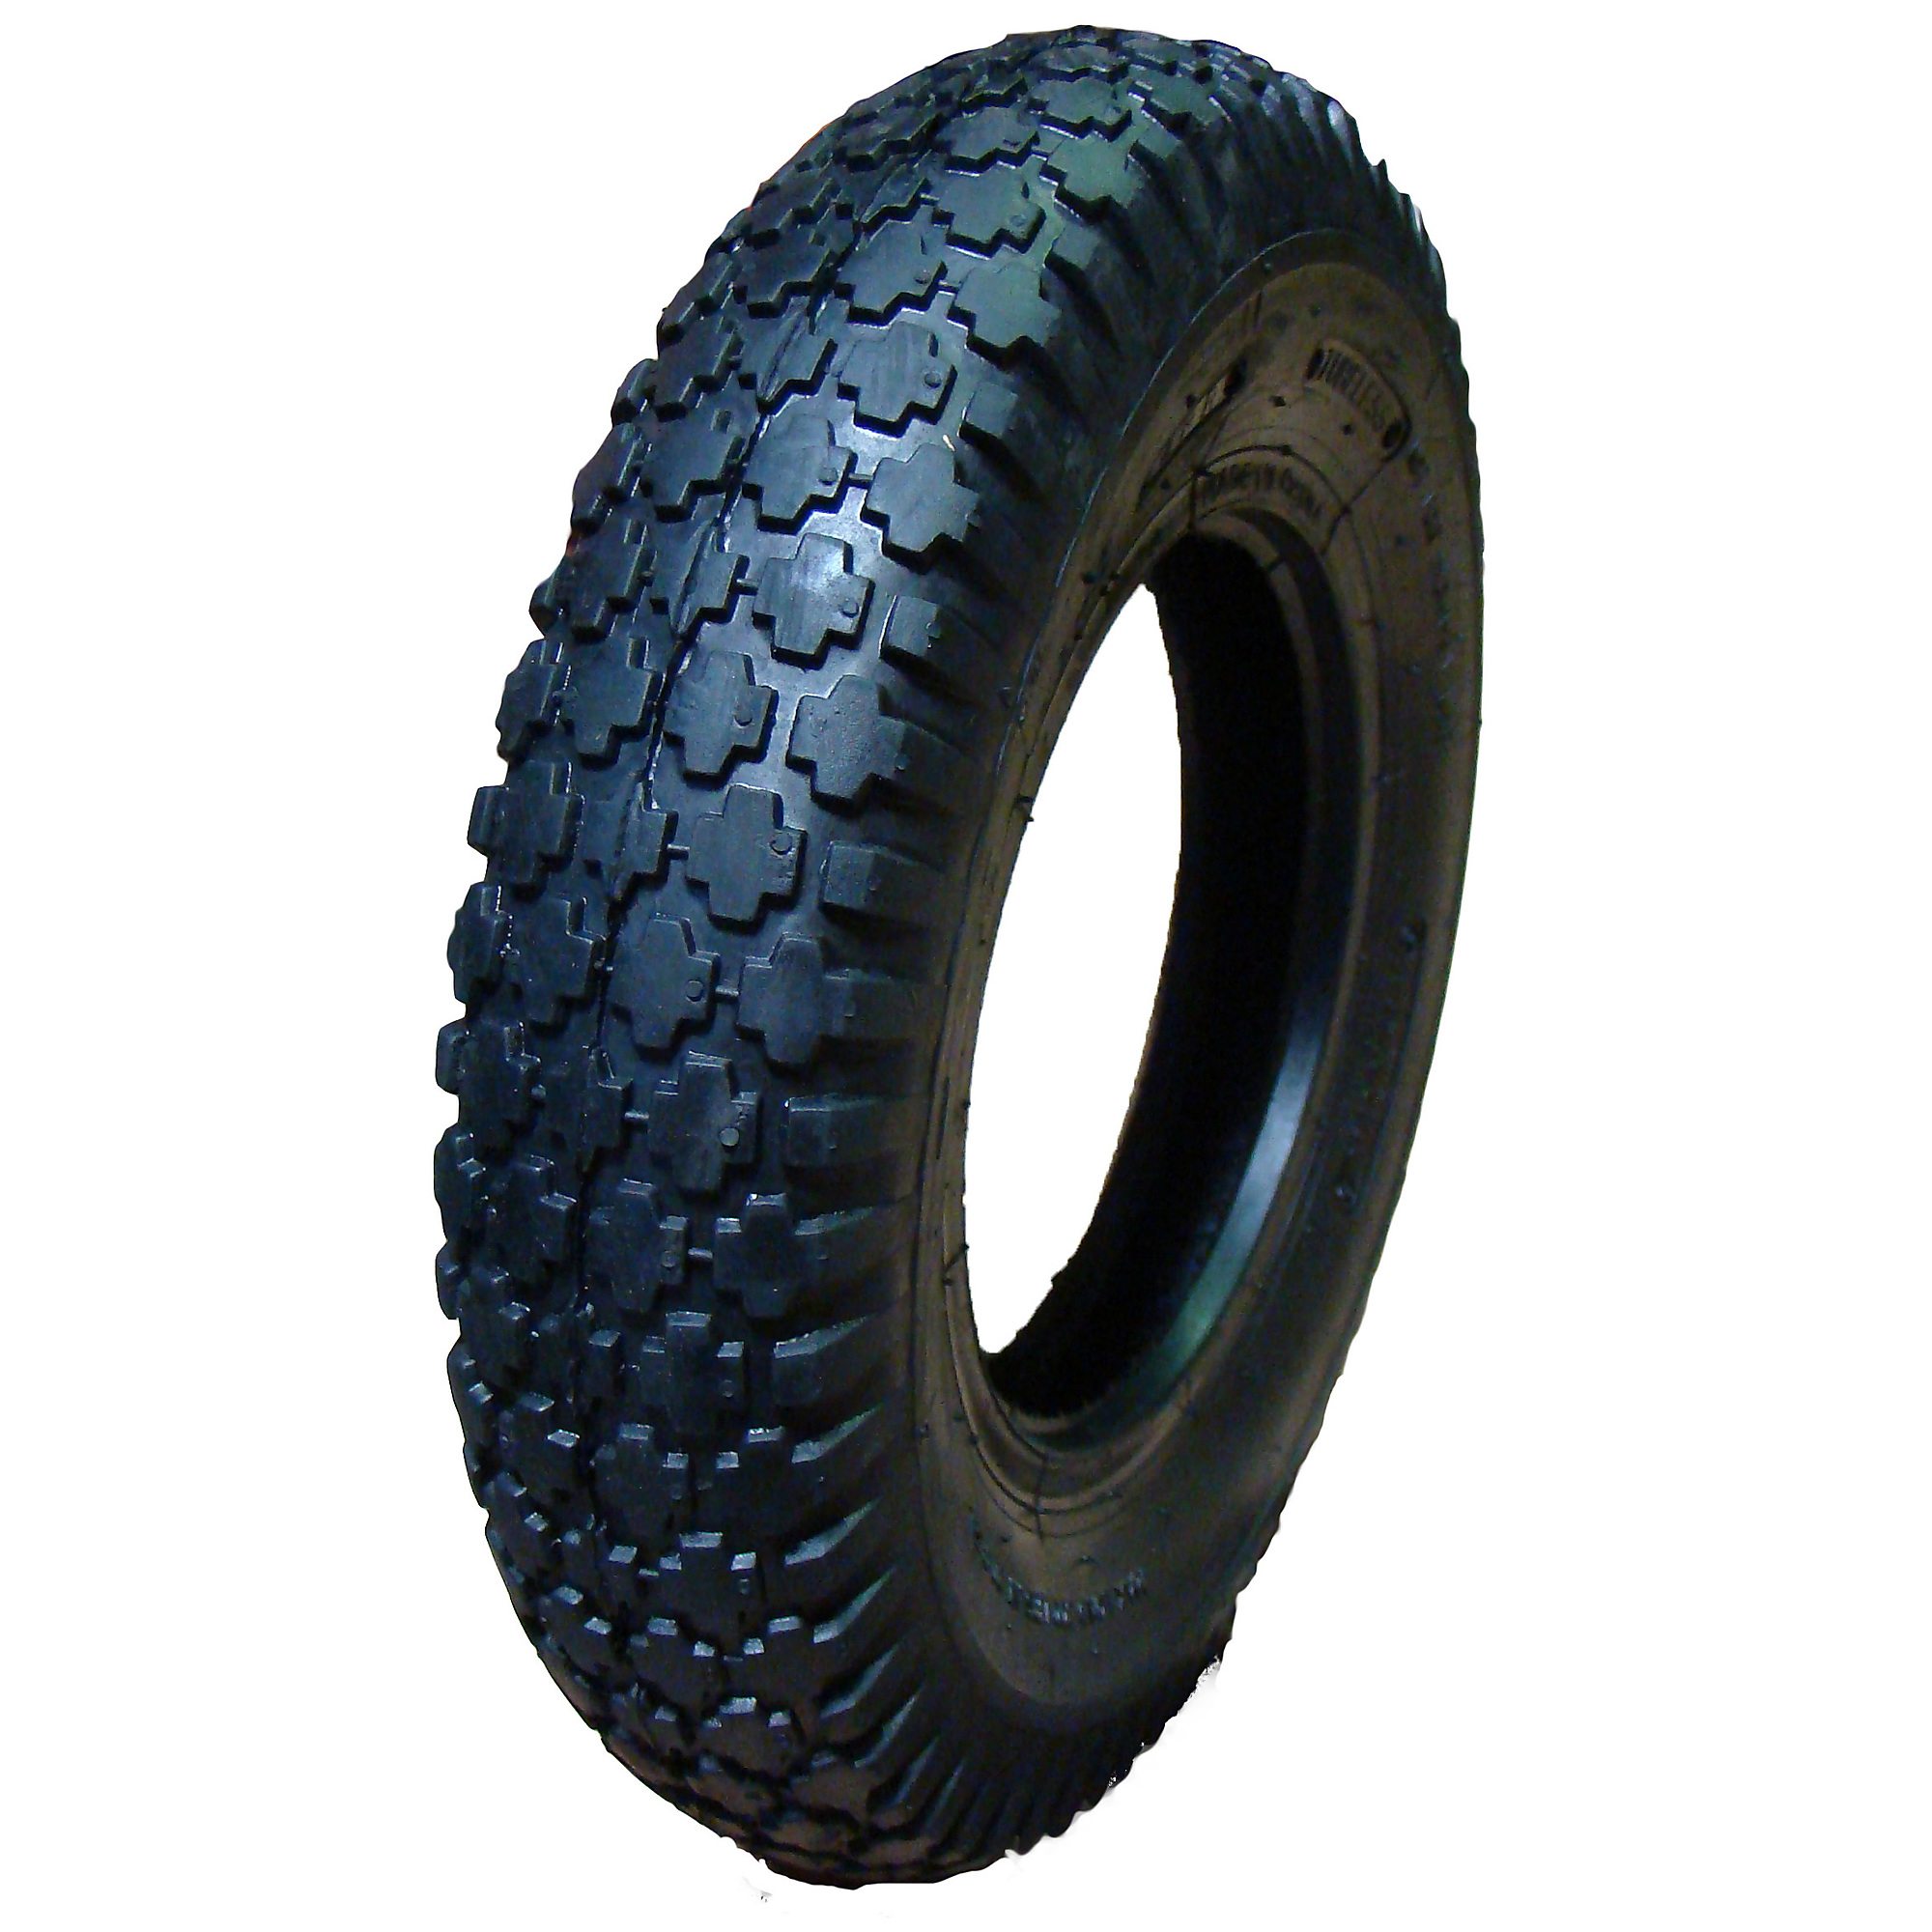 HI-RUN, Wheel Barrow Tire, 4 ply, Stud, Tire Size 4.80/4.00-8 Load Range Rating B, Model CT1008